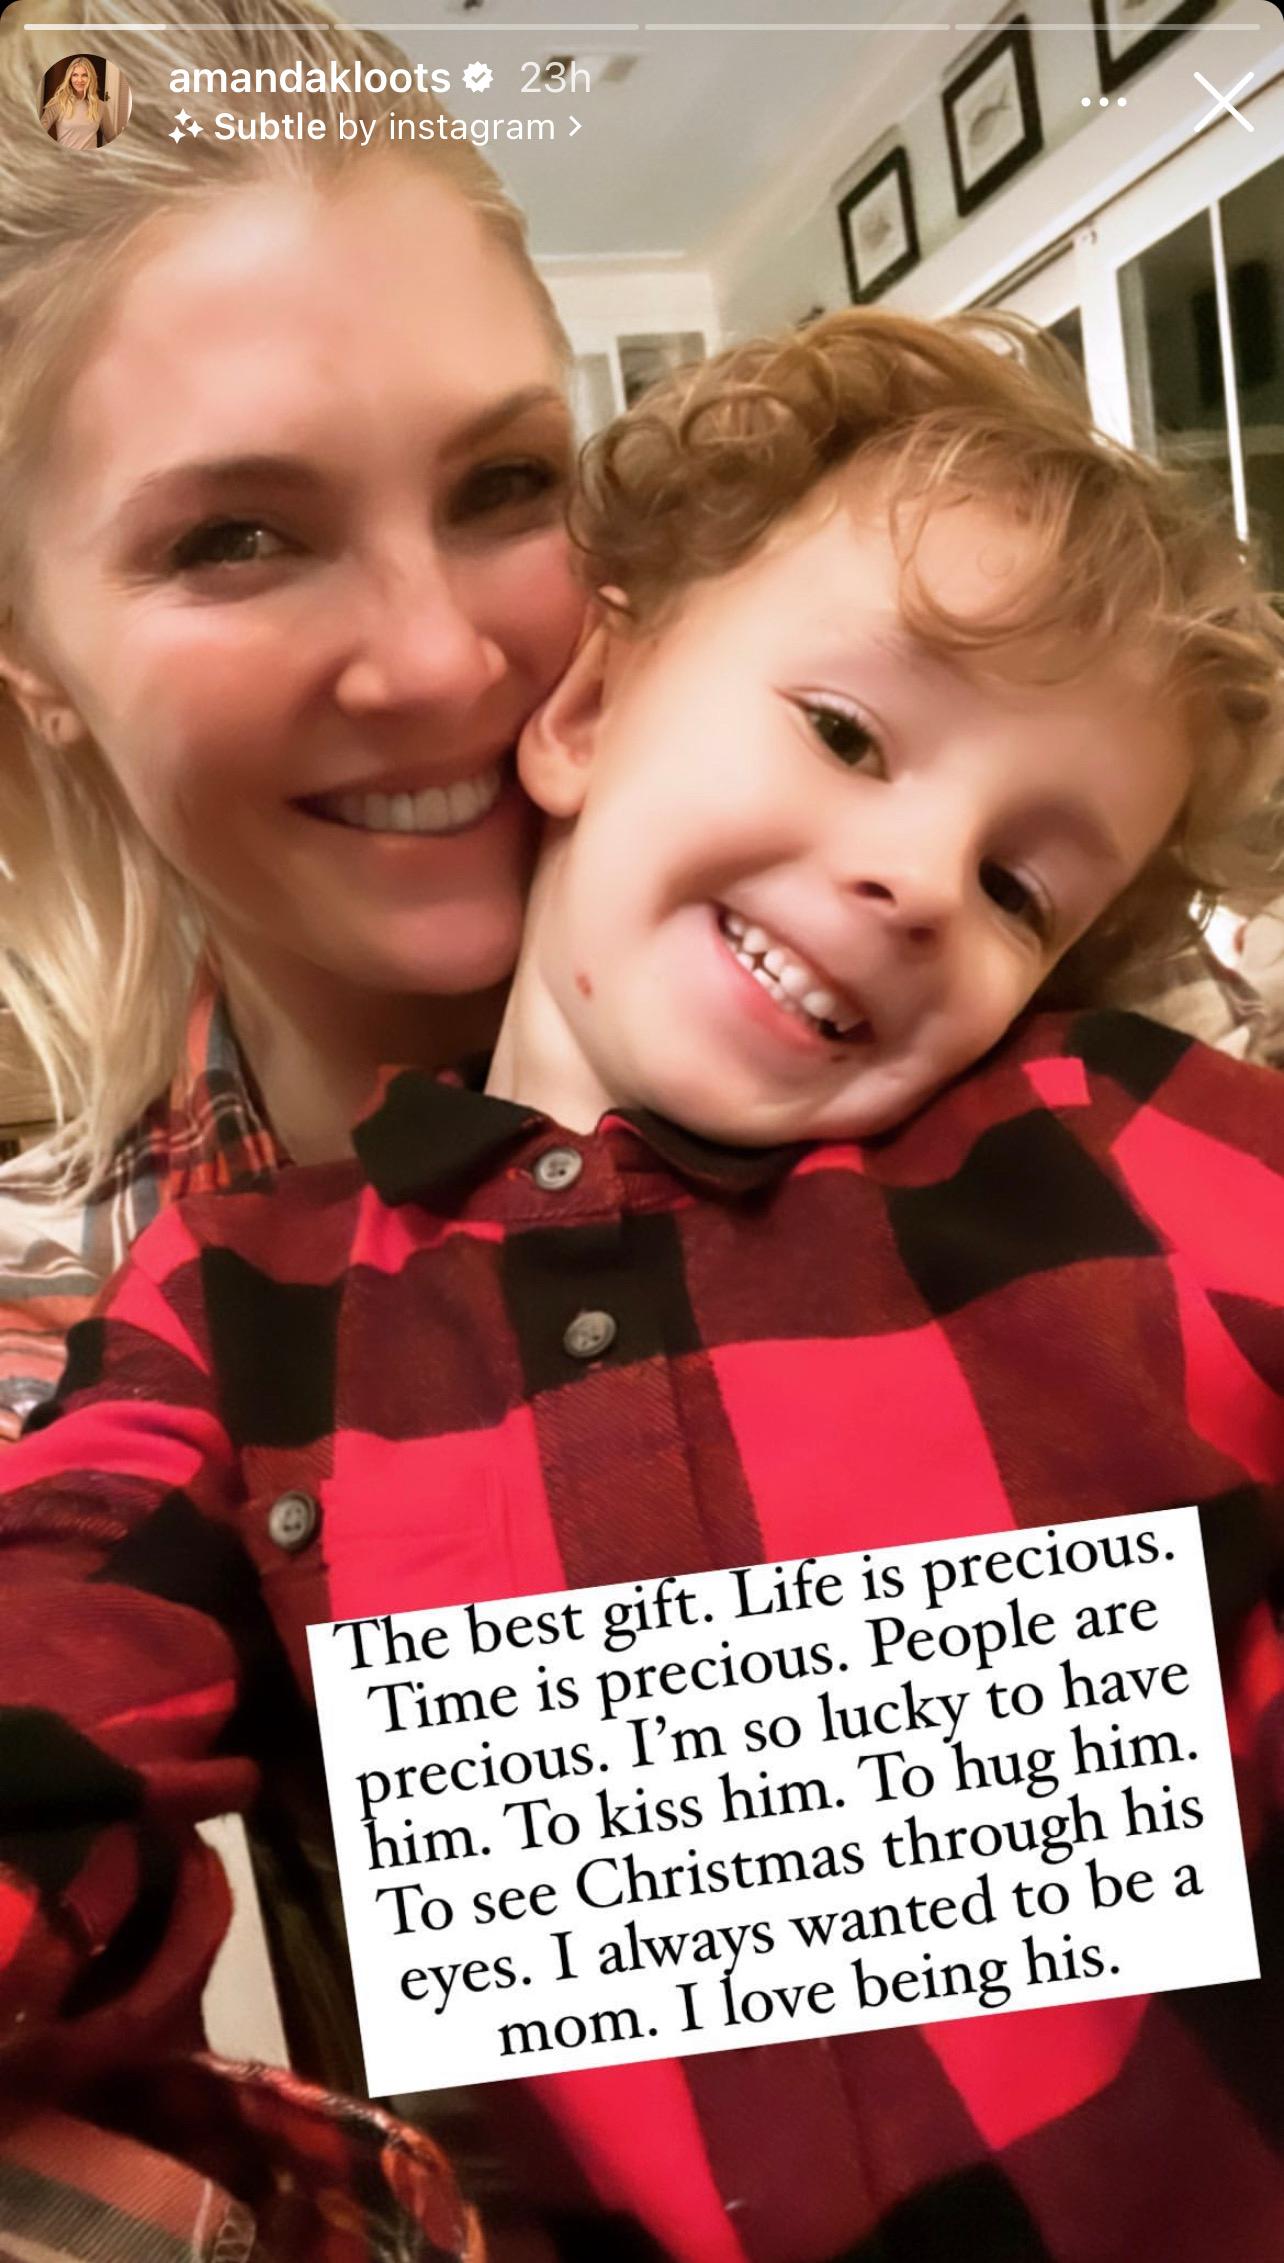 Amanda Kloots' post on her Instagram story